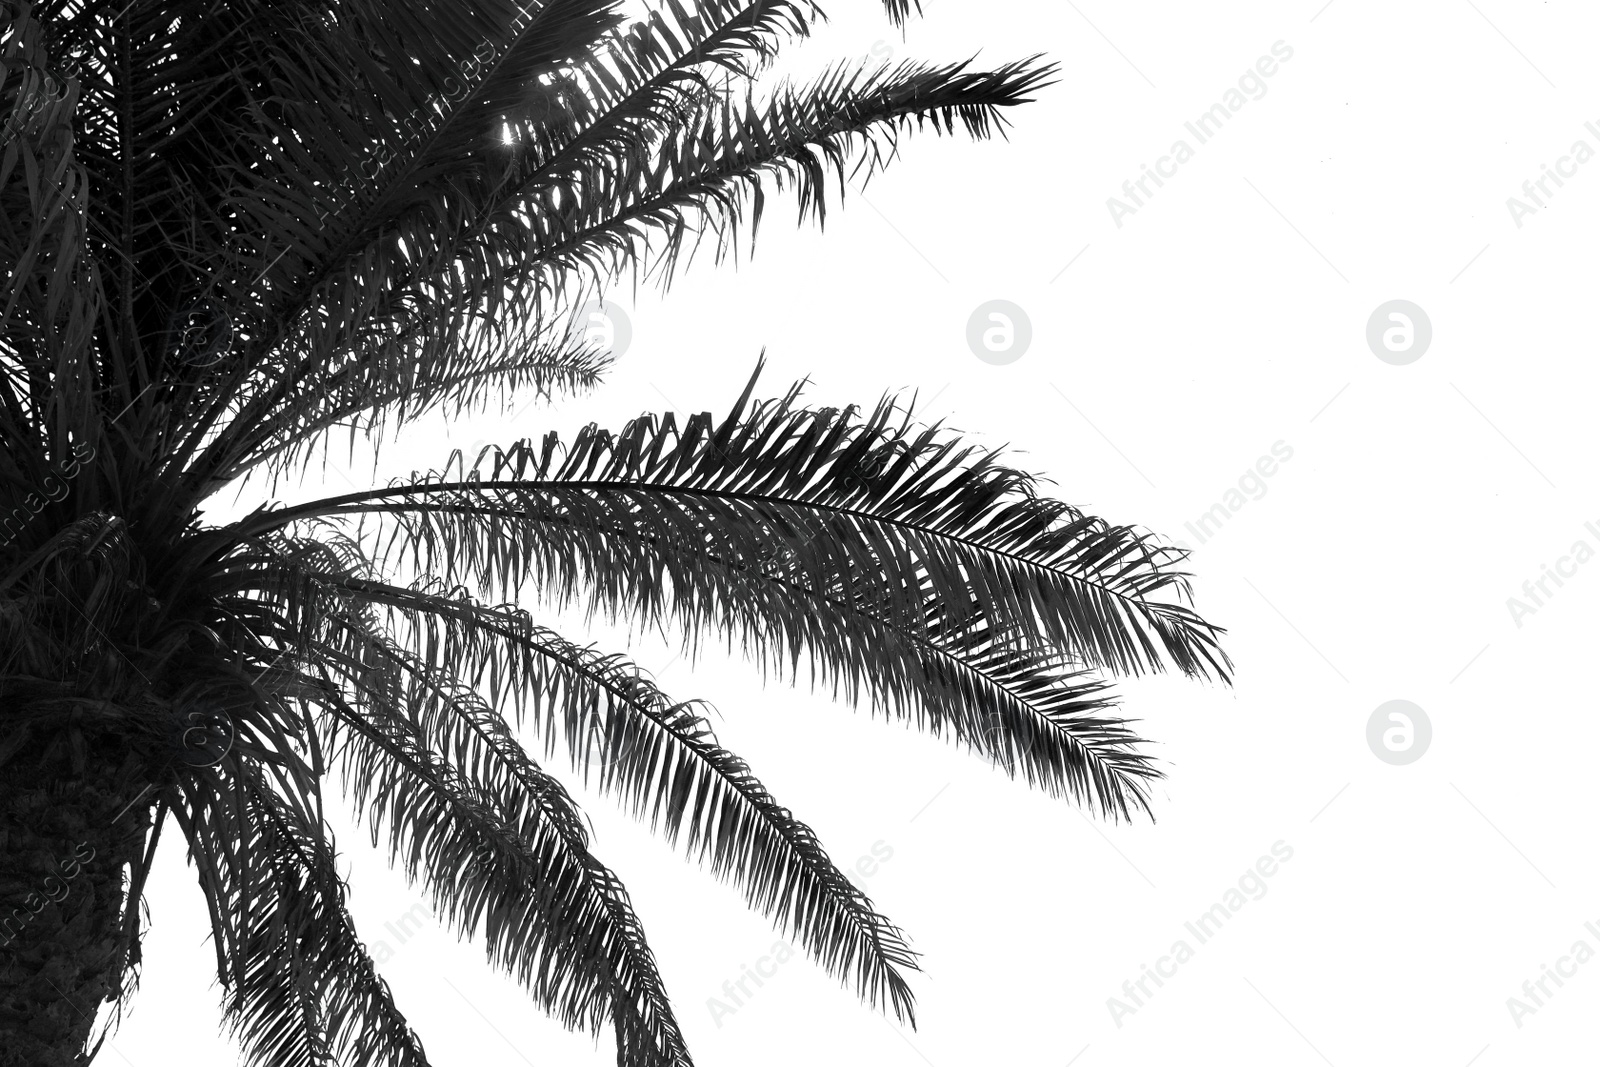 Image of Palm with lush foliage on light background. Black and white tone